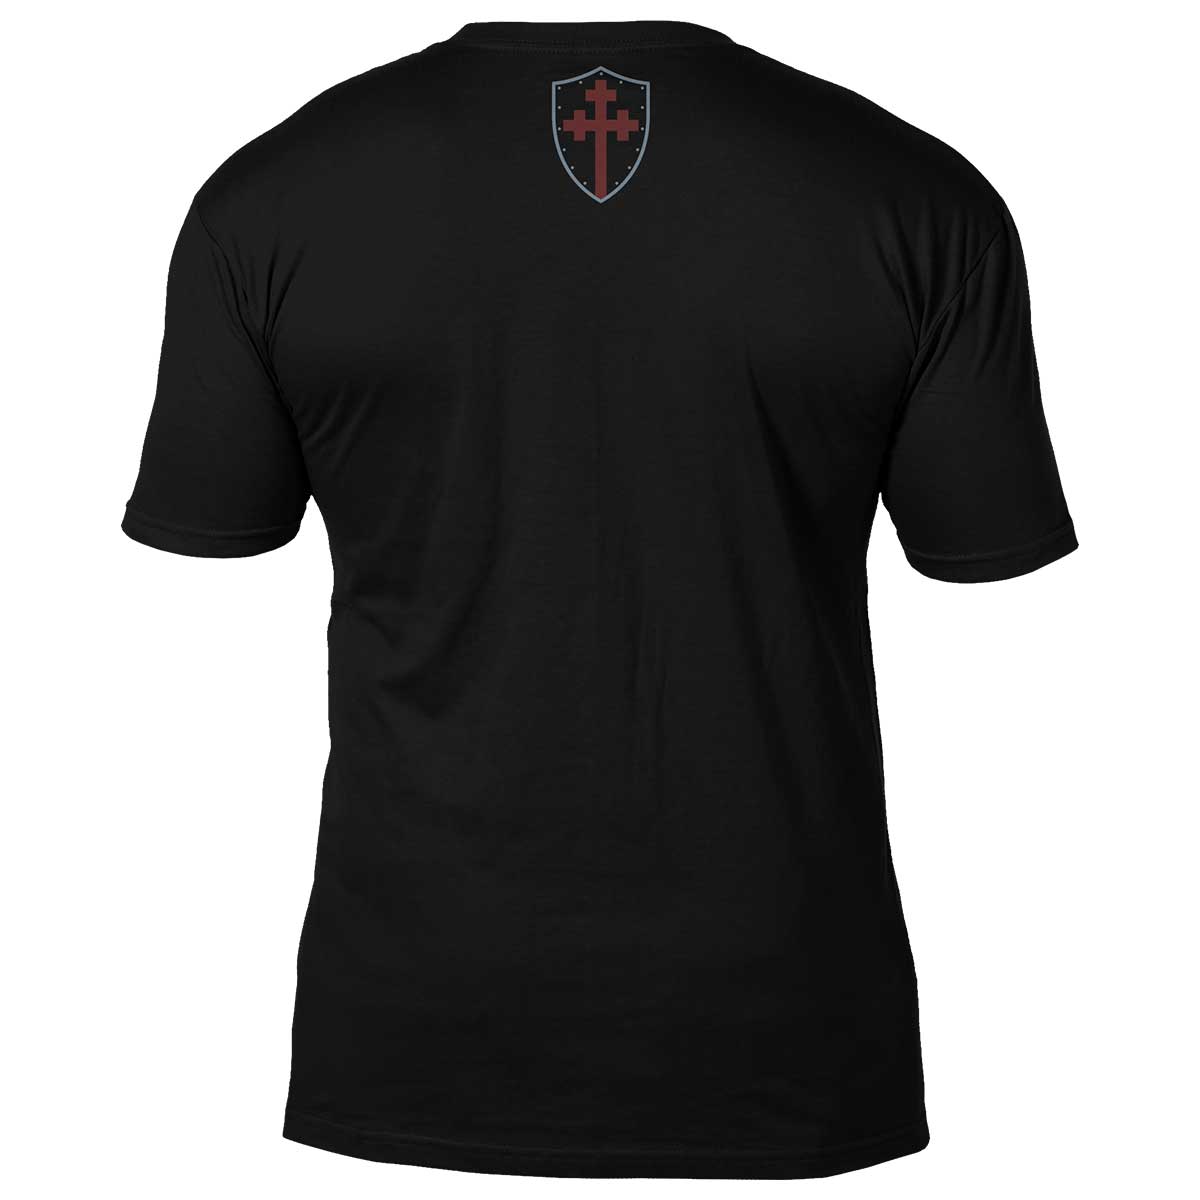 St Michael 'Defend Us' 7.62 Design Premium Men's T-Shirt